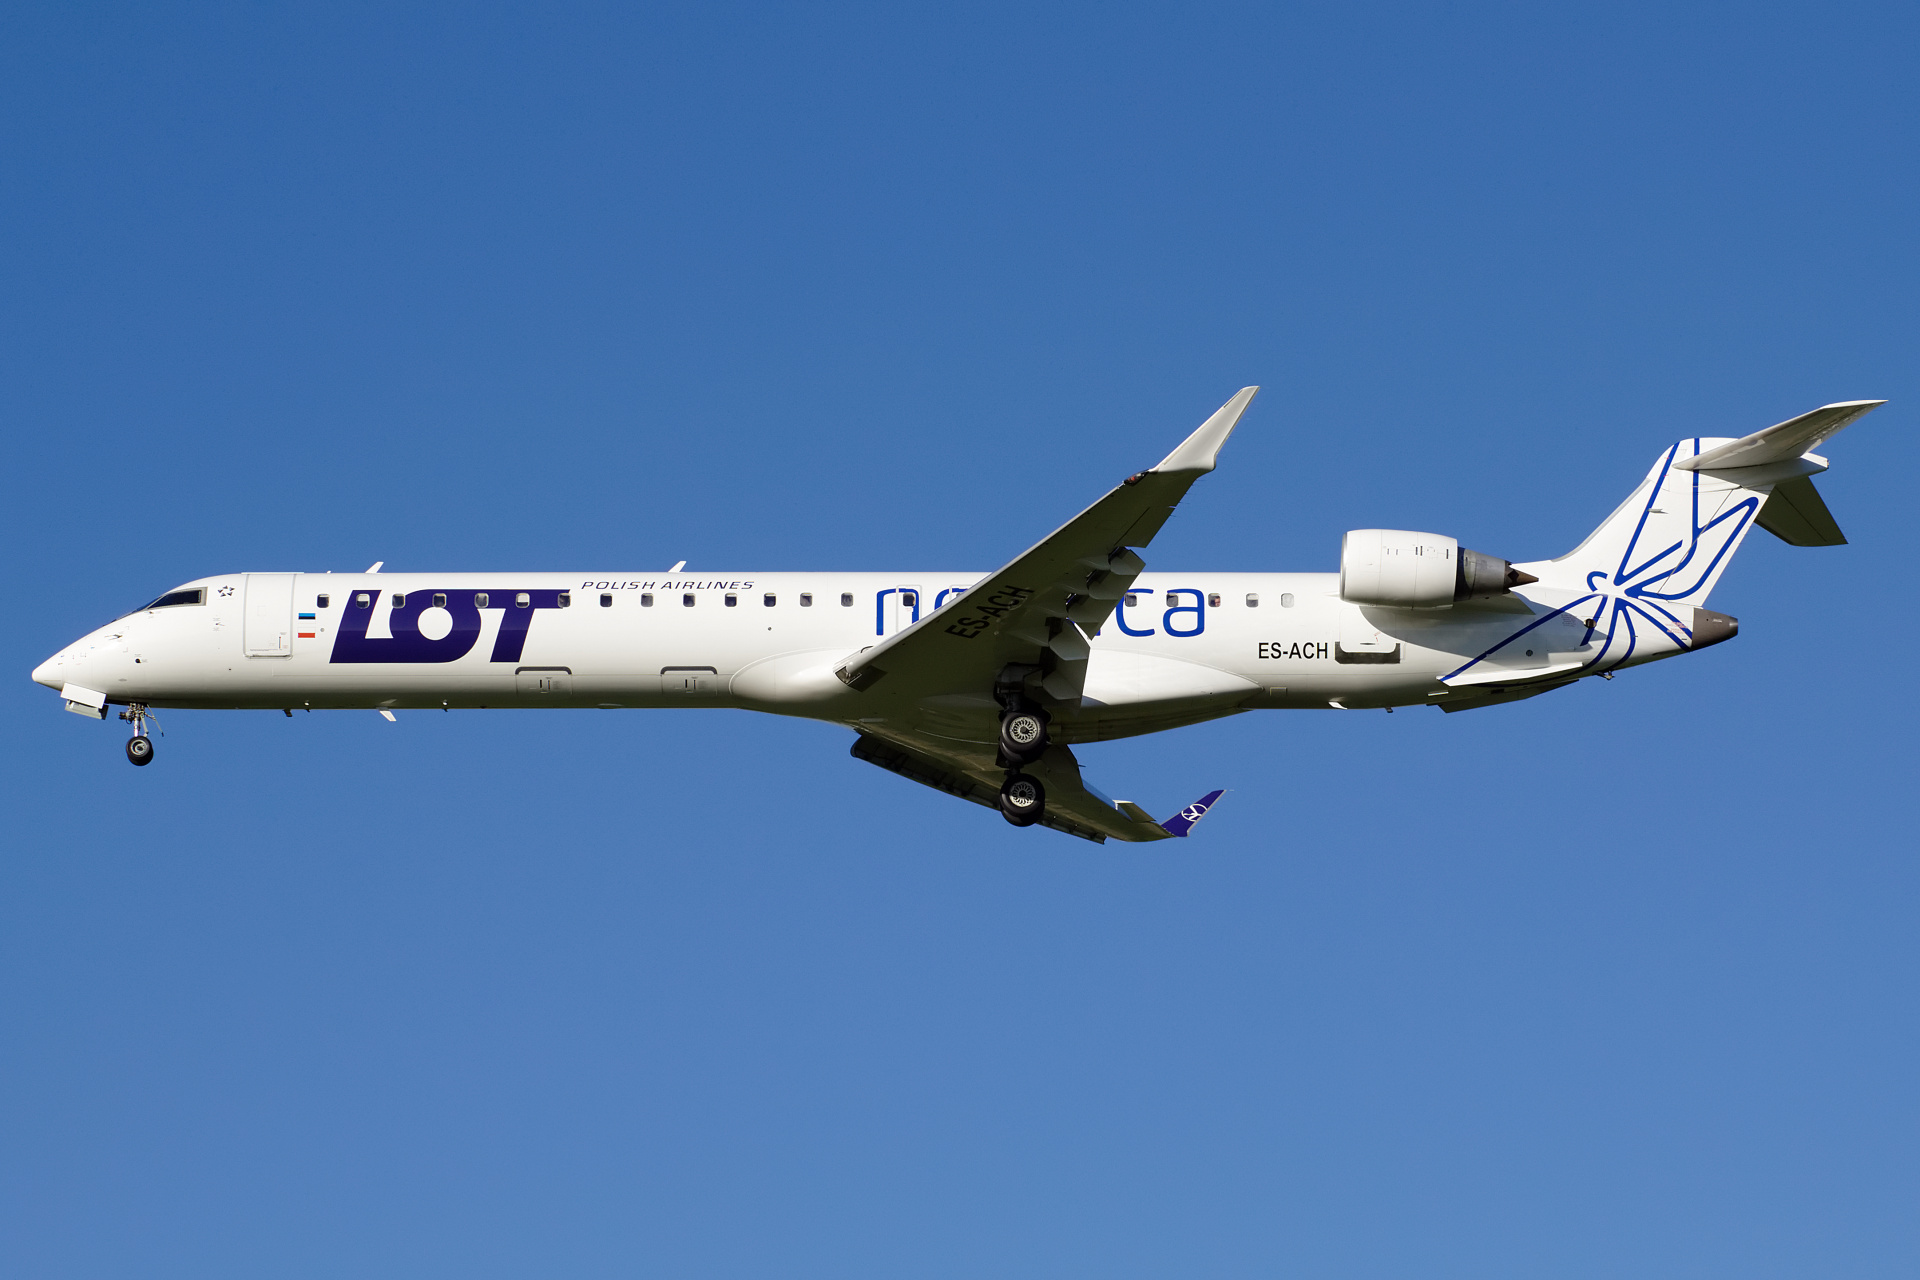 ES-ACH (LOT Polish Airlines - Nordica hybrid livery) (Aircraft » EPWA Spotting » Mitsubishi Regional Jet » CRJ-900 » Nordica)